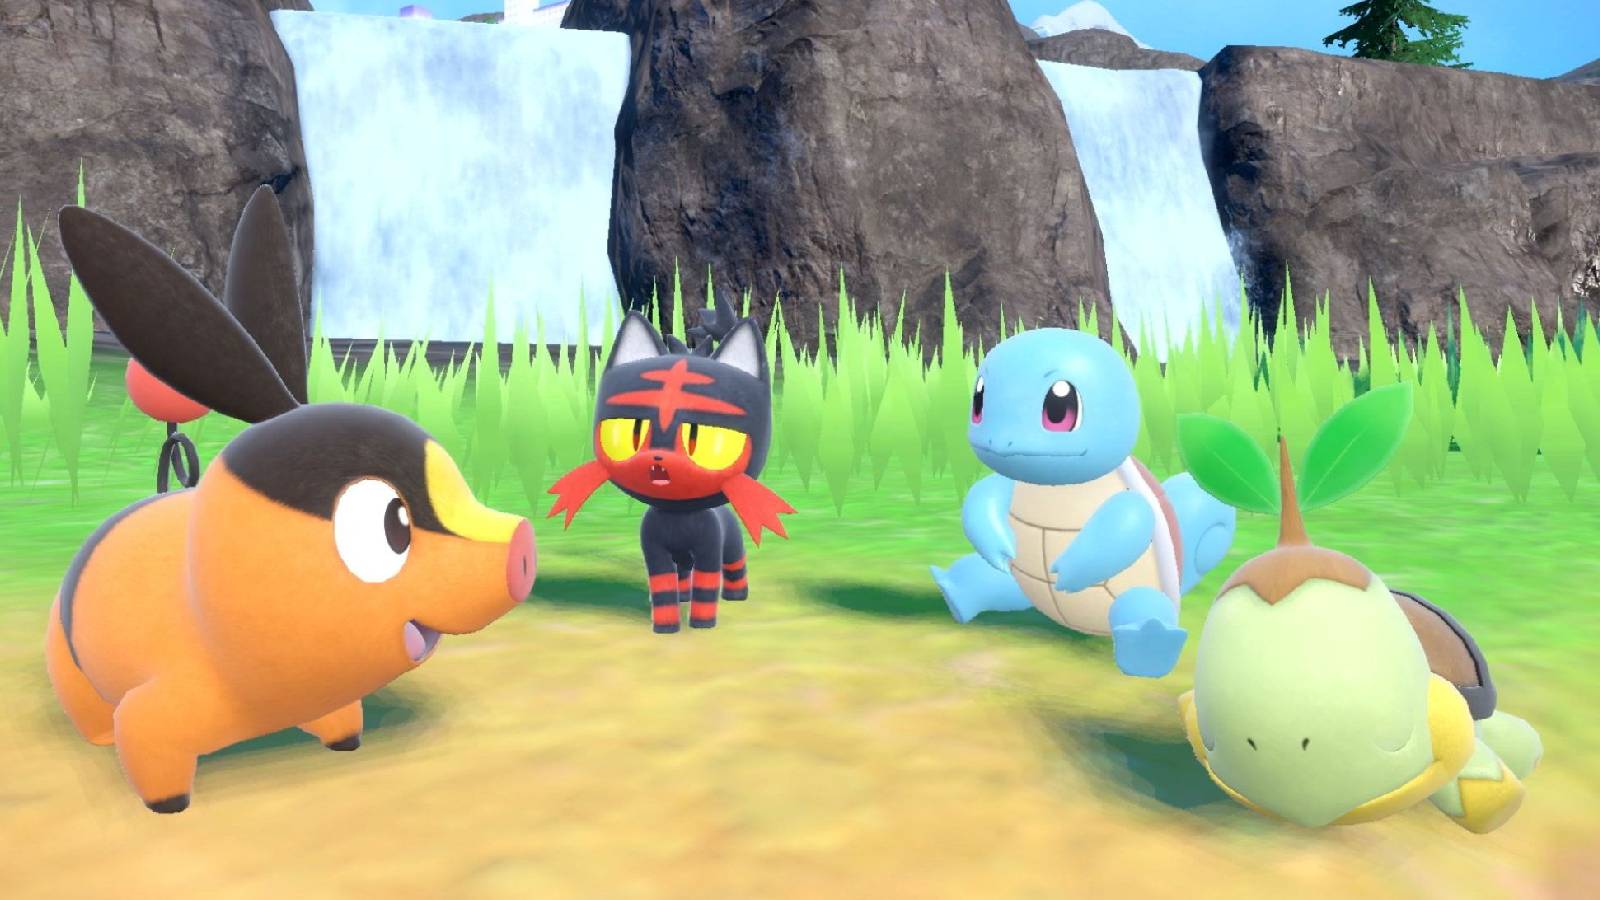 A screenshot from Pokemon Scarlet & Violet shows several starter Pokemon gathered together